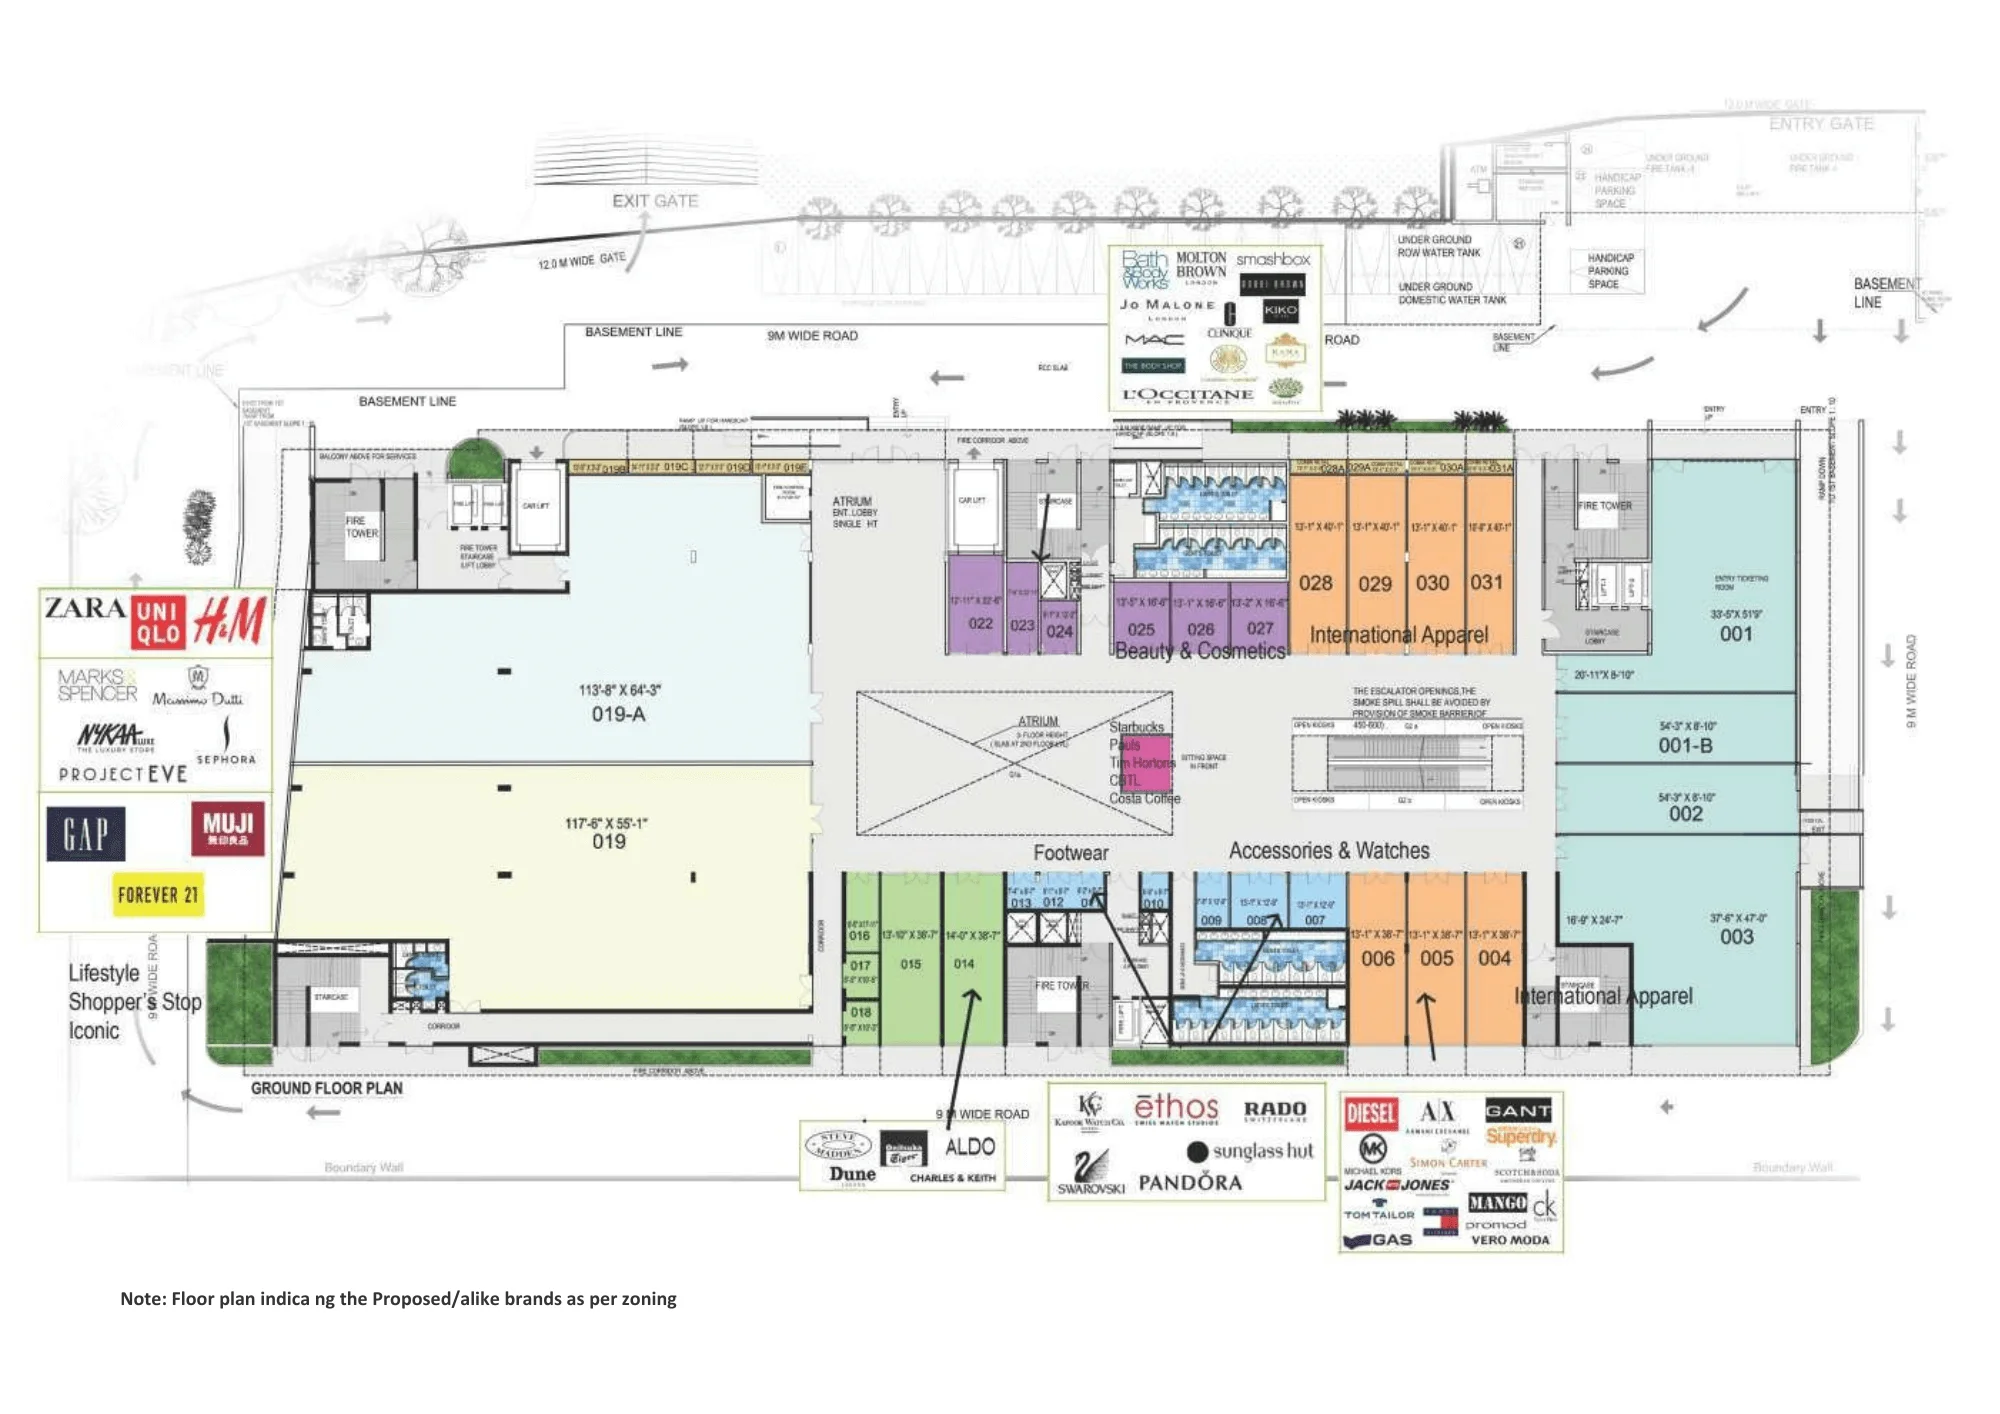 Delhi Mall Ground Floor Plan